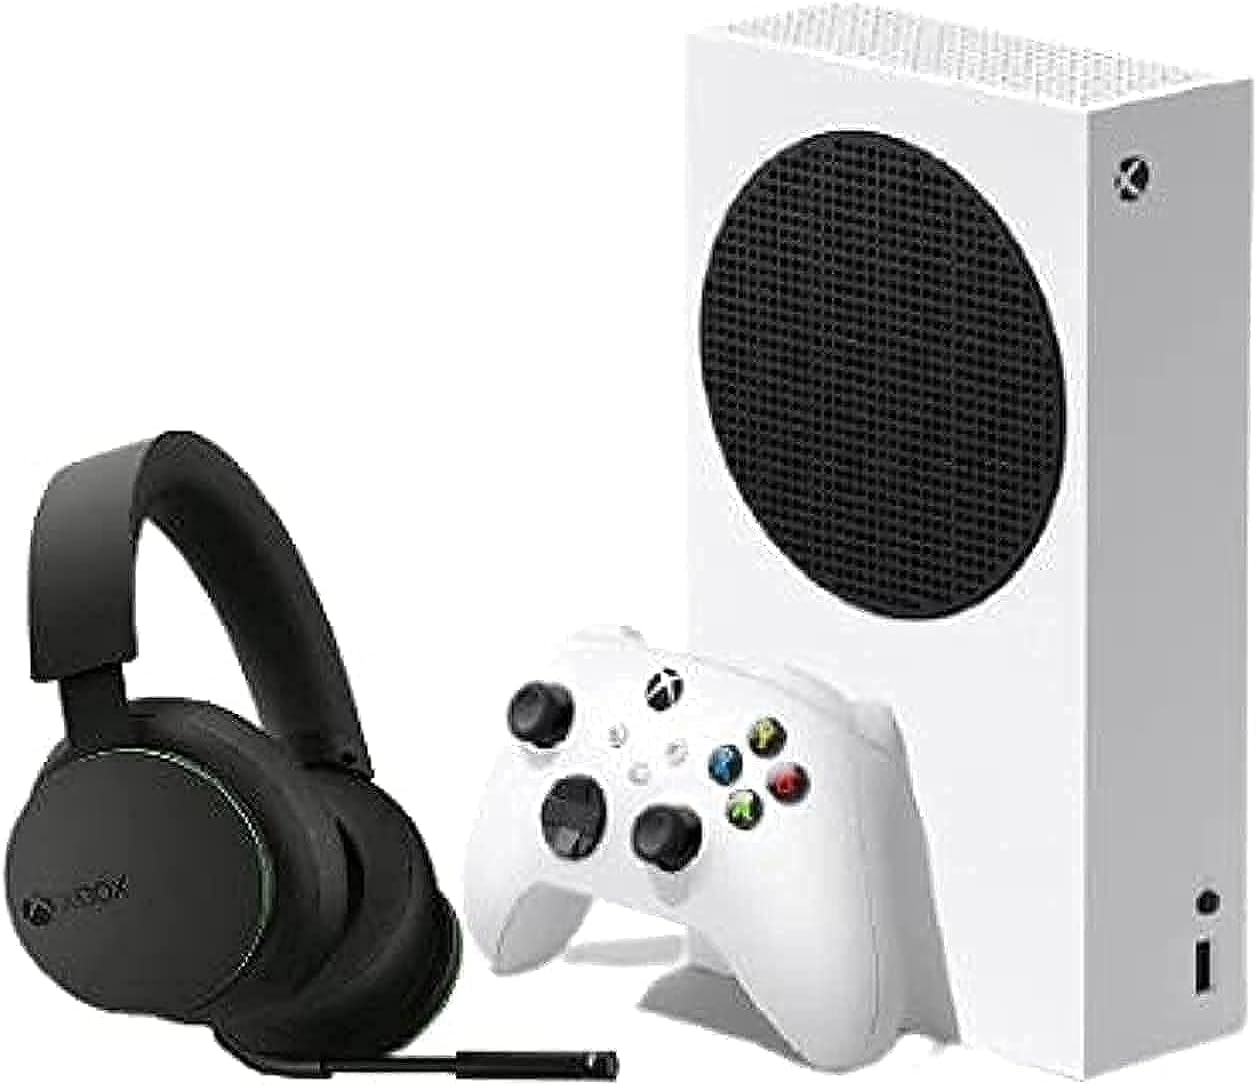 Microsoft Xbox Series S Console (KSA Version) +2 Years Manufacturer Warranty